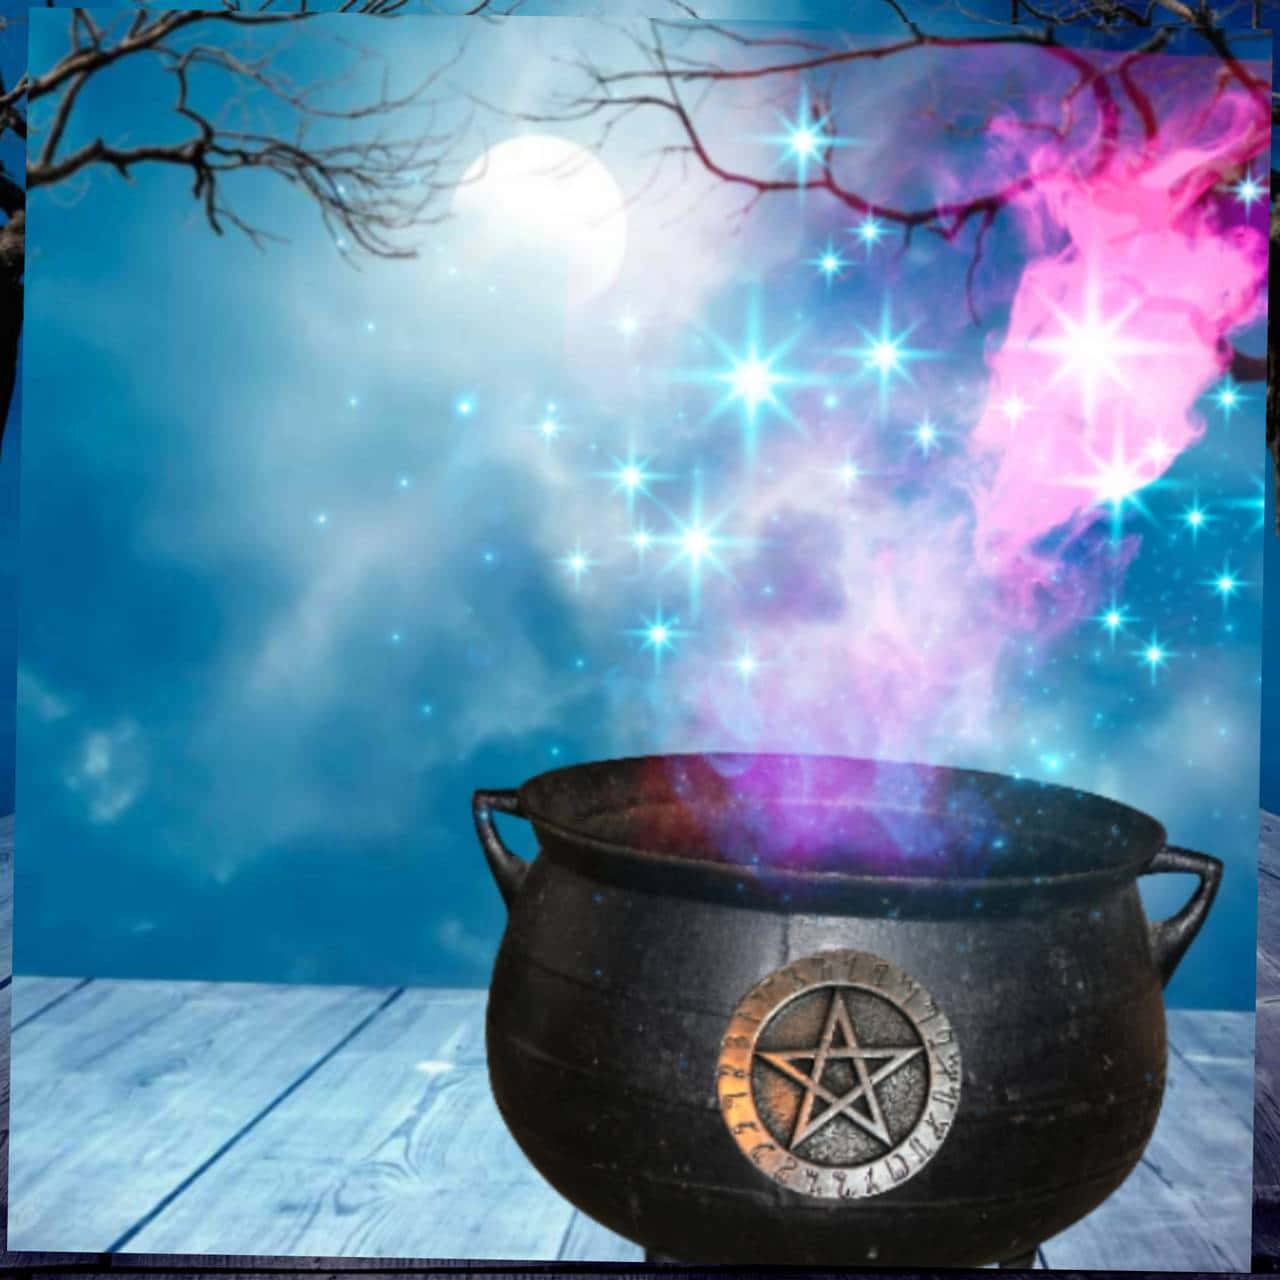 Caption: Enchanting Cauldron Surrounded by Mystical Elements Wallpaper